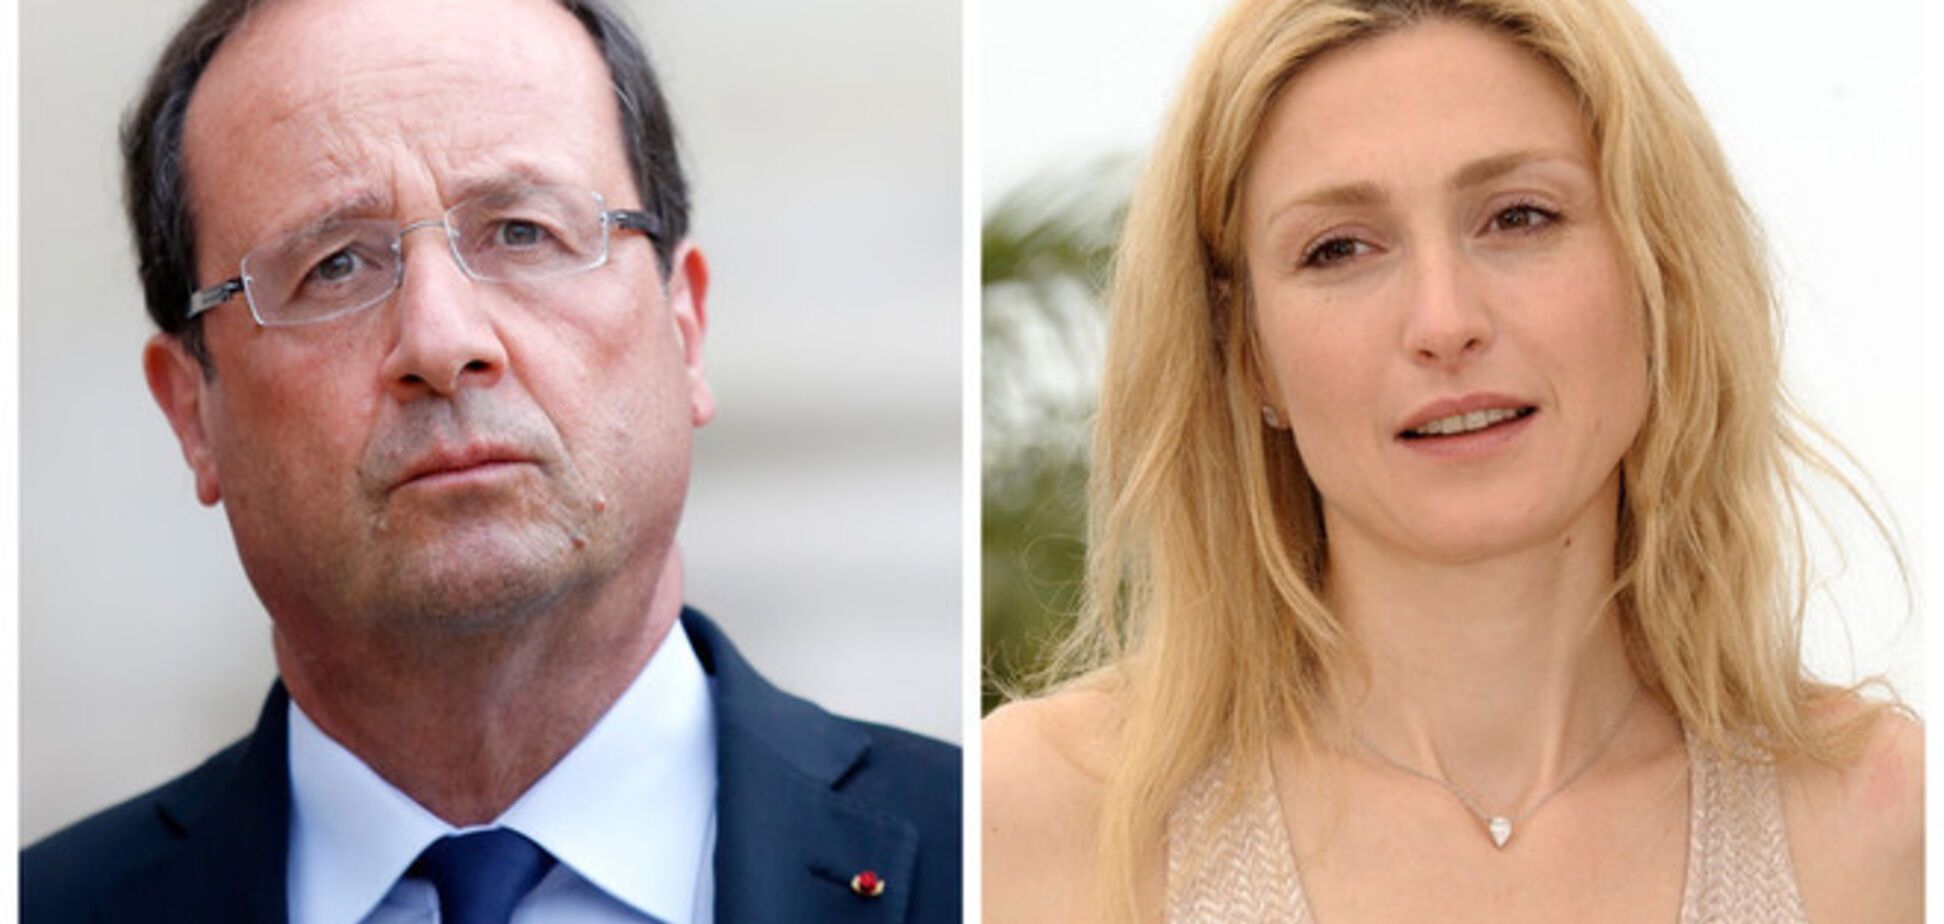 Во французских СМИ появились слухи о свадьбе Олланда 12 августа